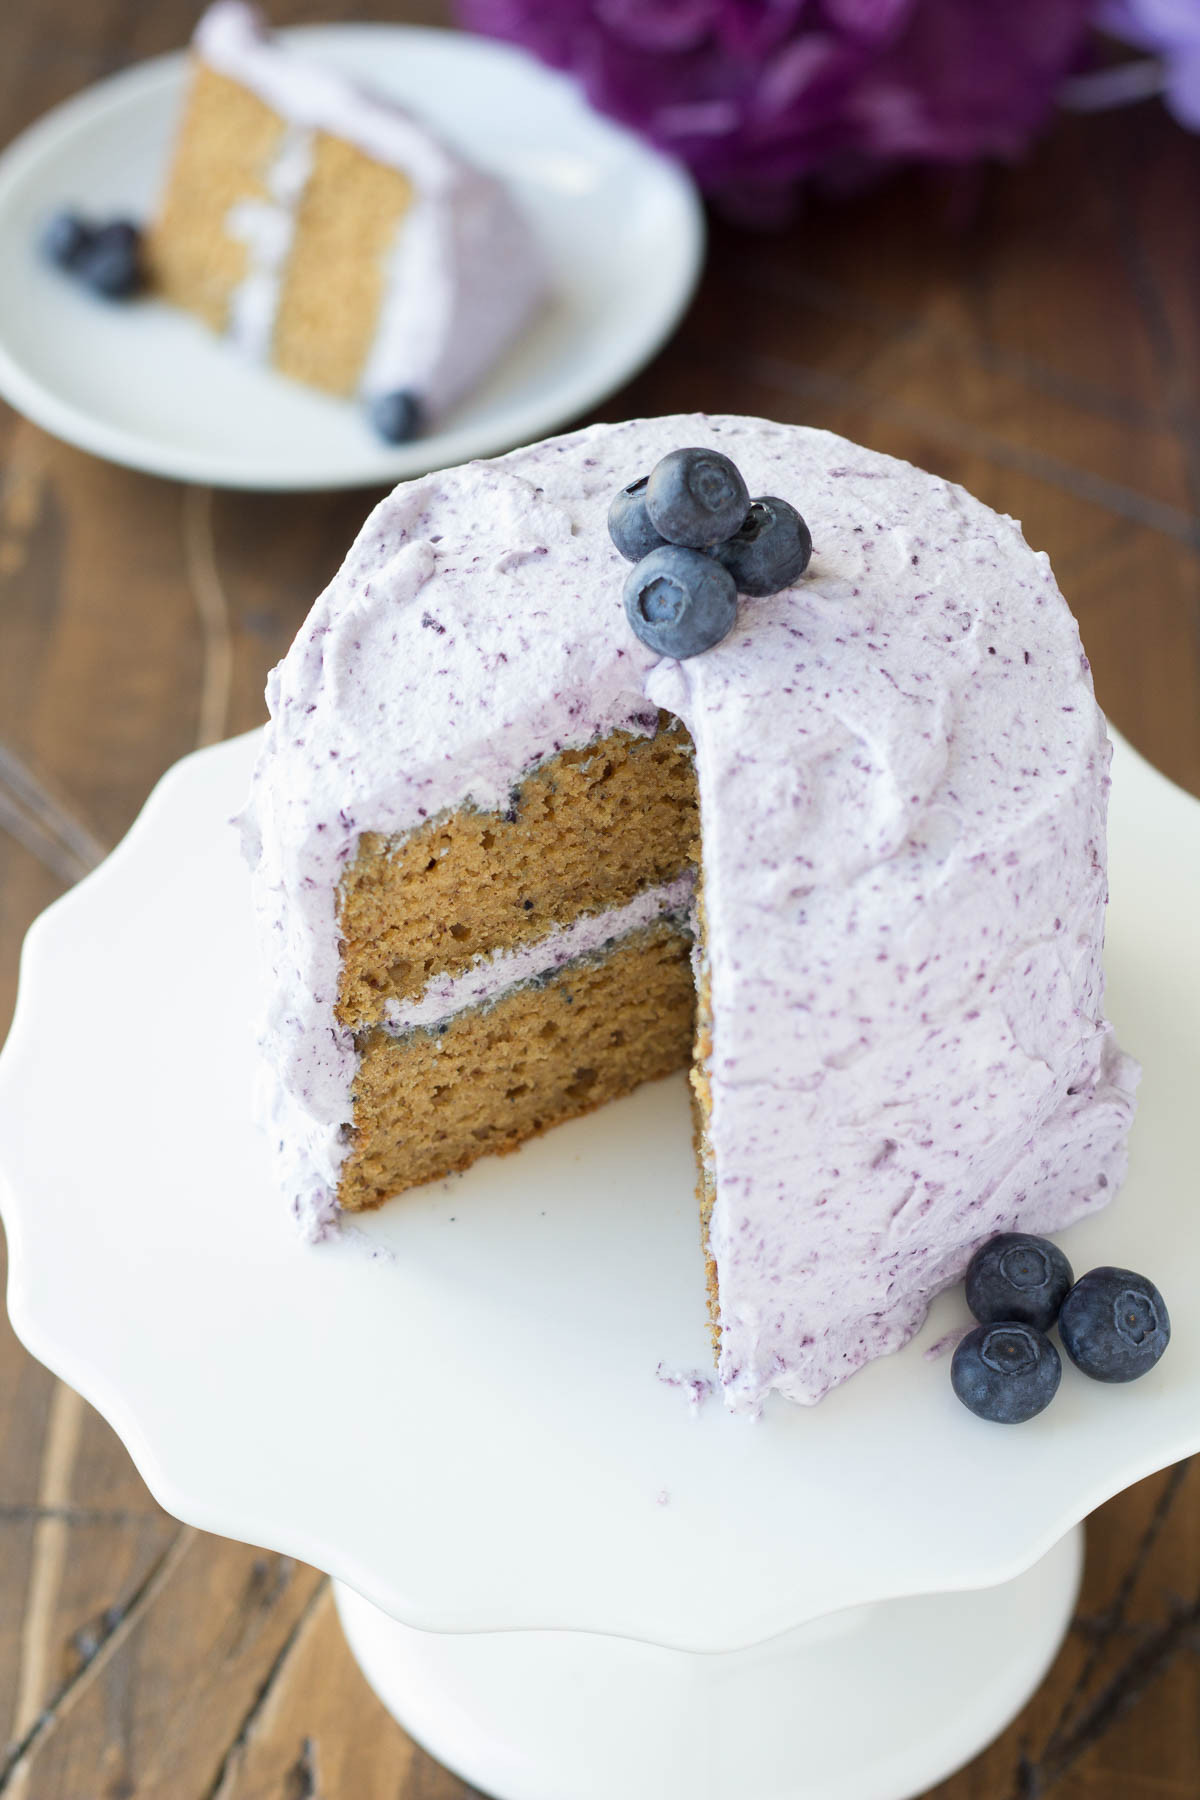 Healthy Smash Cake Recipe 1St Birthday
 Healthier Smash Cake Recipe Hannah s Purple Polka Dot 1st